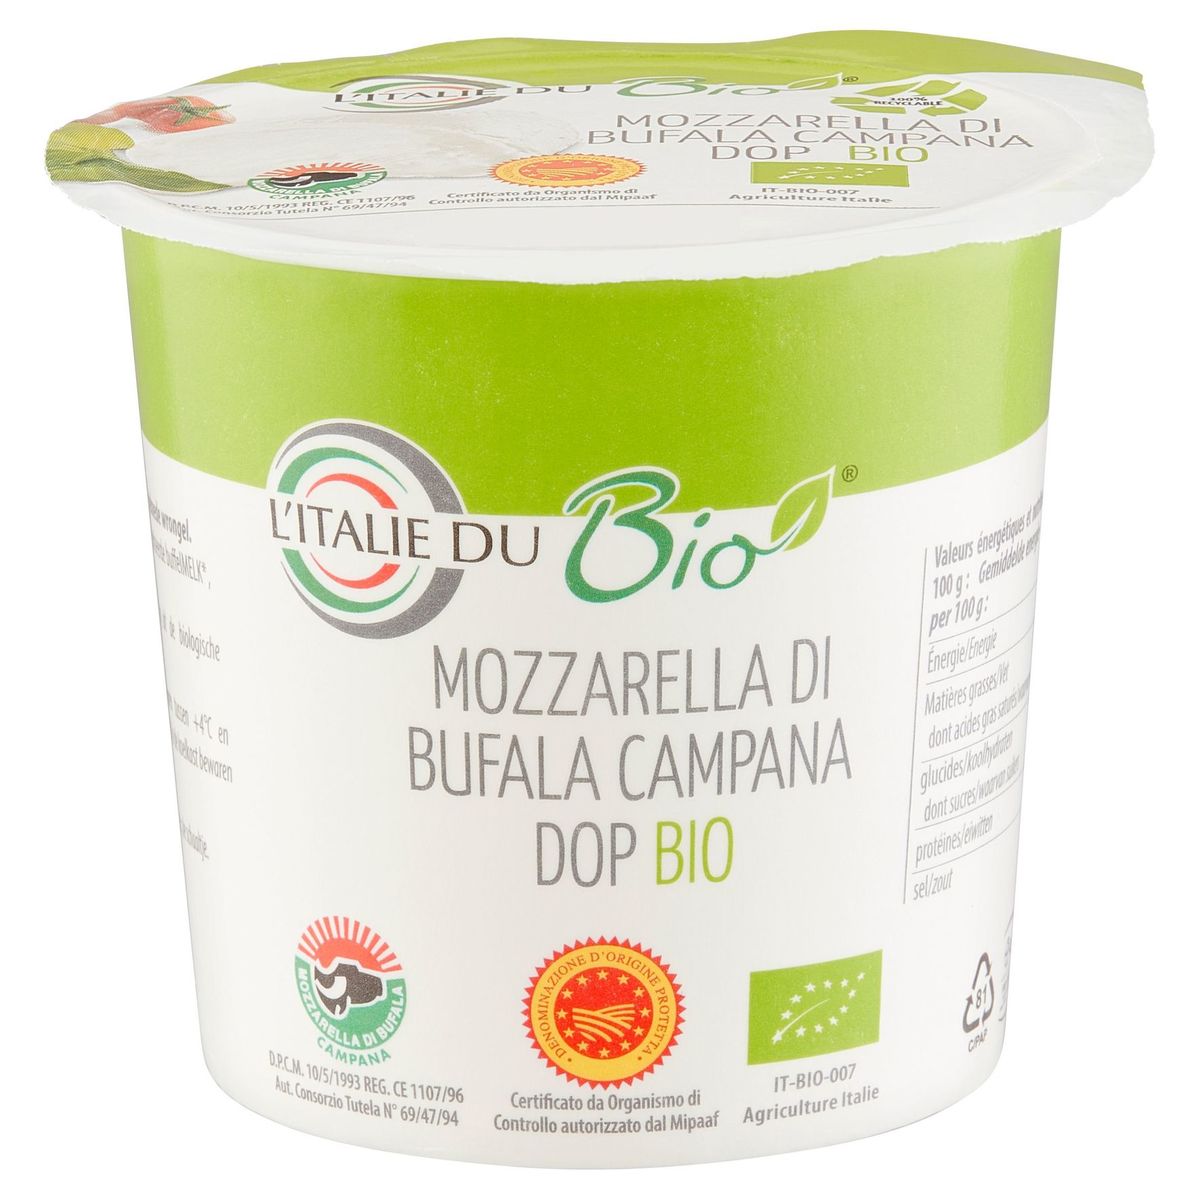 L'Italie du Bio Mozzarella di Bufala Campana DOP Bio 125 g